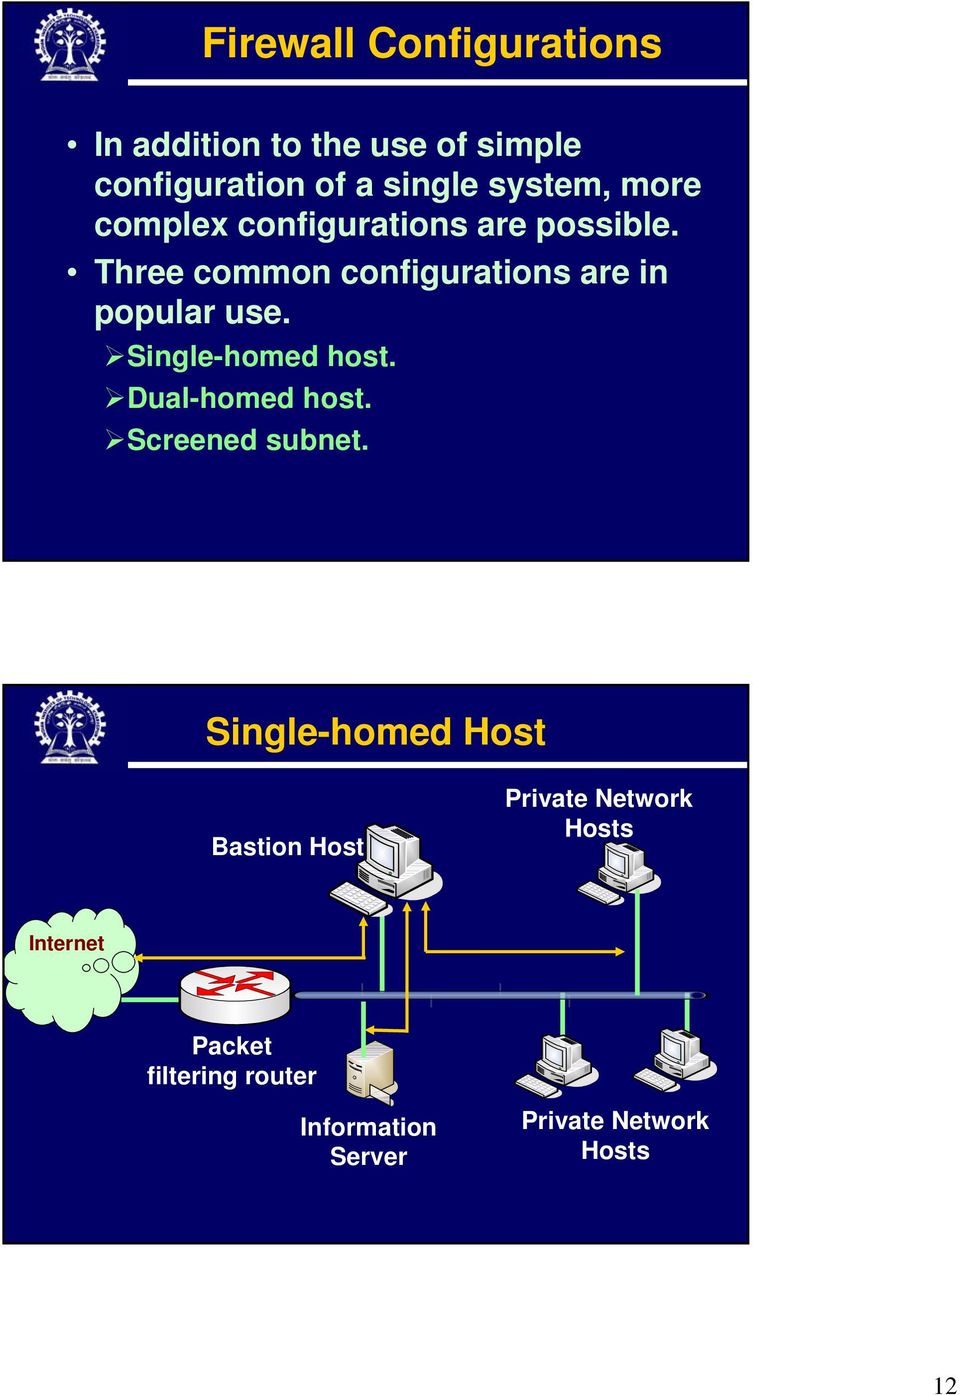 Single-homed host. Dual-homed host. Screened subnet.